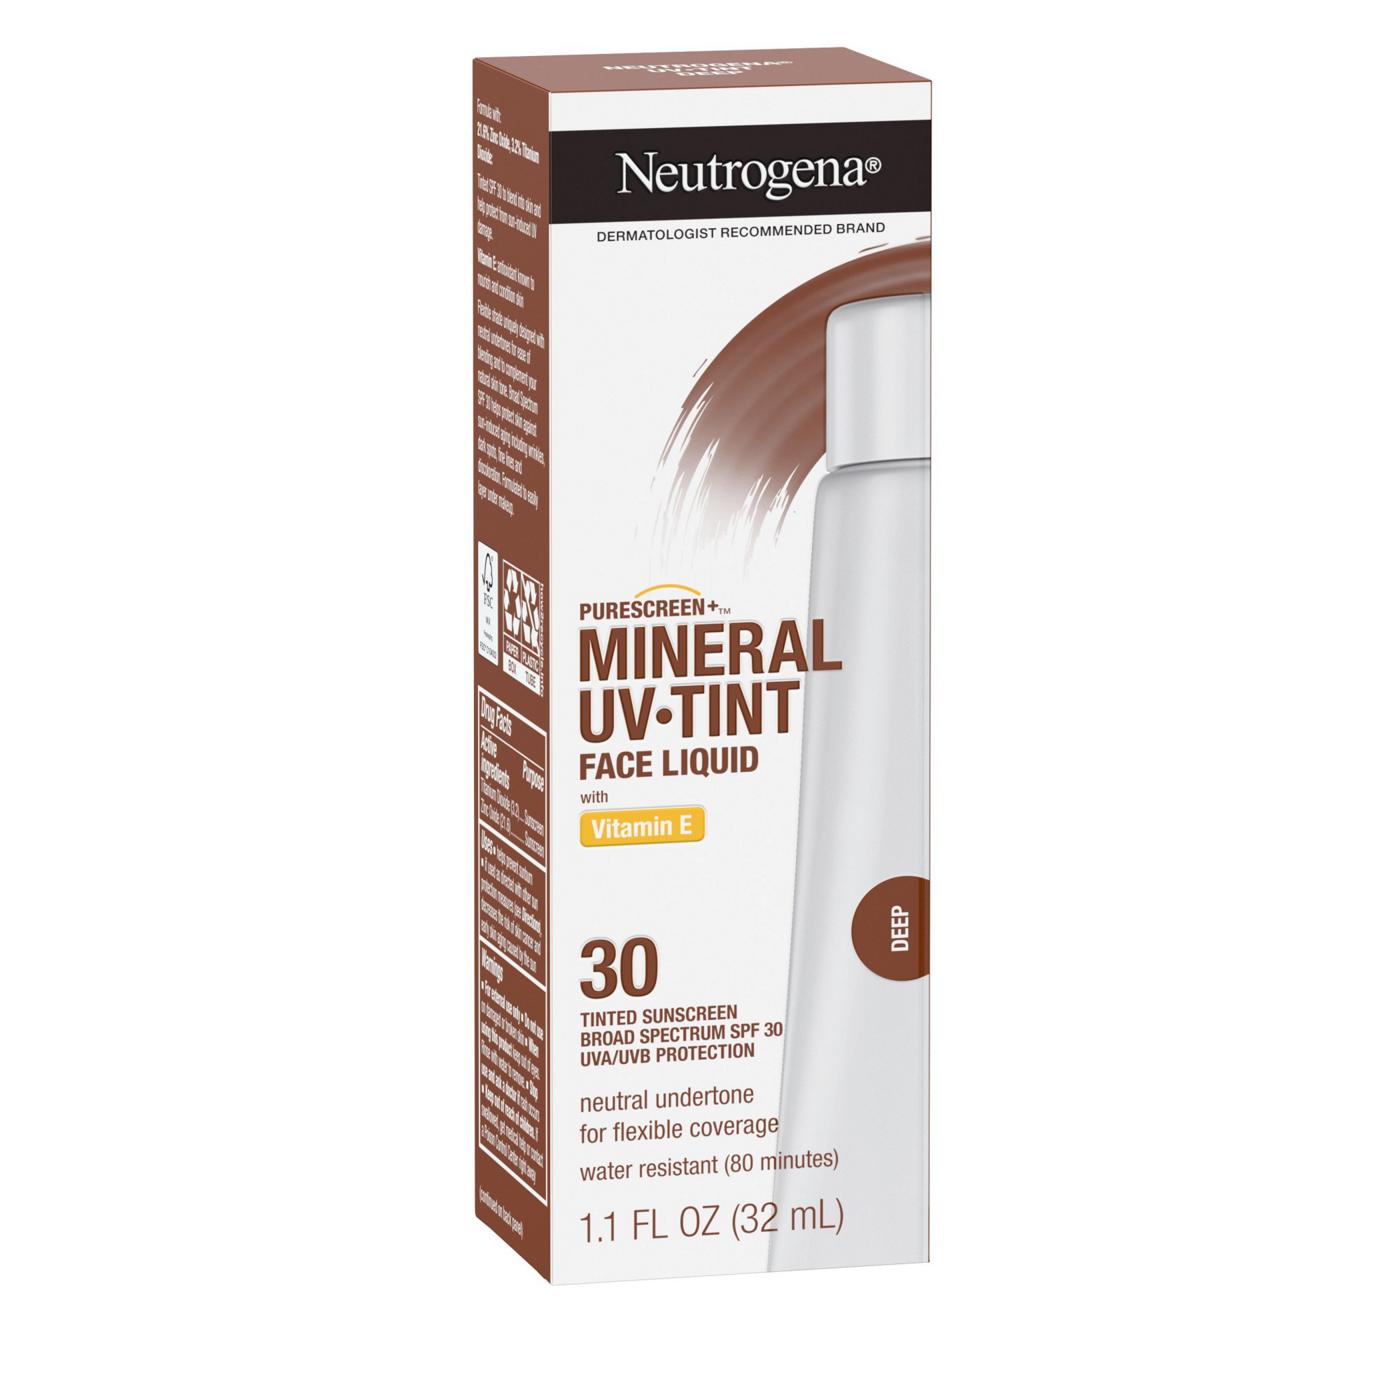 Neutrogena Purescreen+ Mineral Uv Tint Face Liquid With Vitamin E, Tinted Sunscreen Broad Spectrum SPF 30, Deep; image 2 of 8